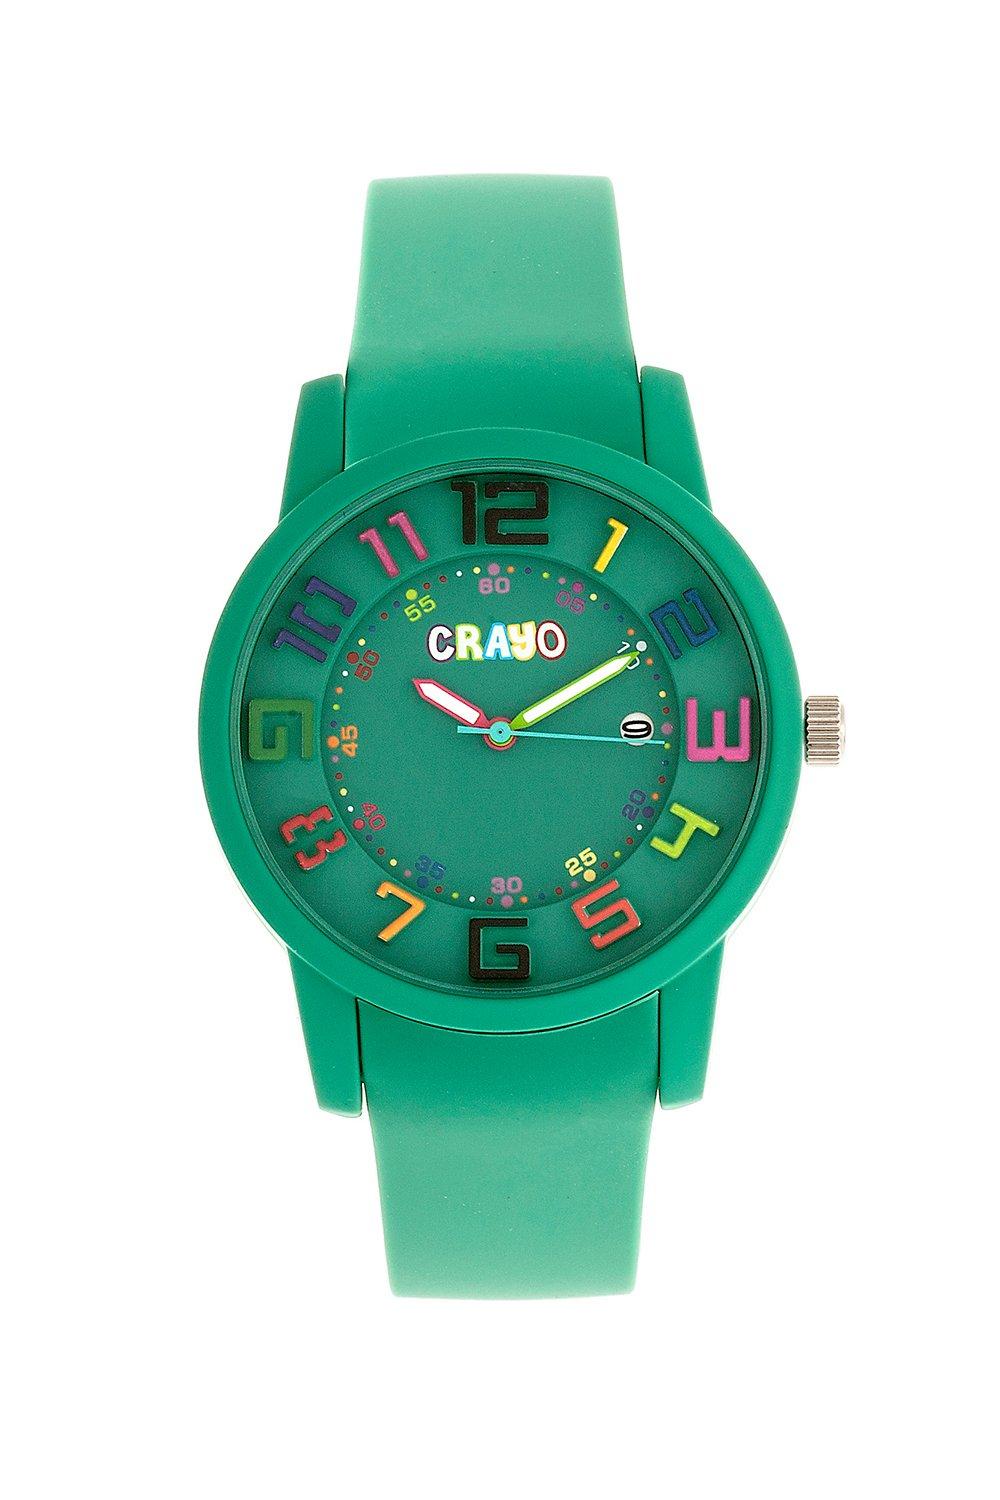 цена Часы унисекс Festival с датой Crayo, зеленый